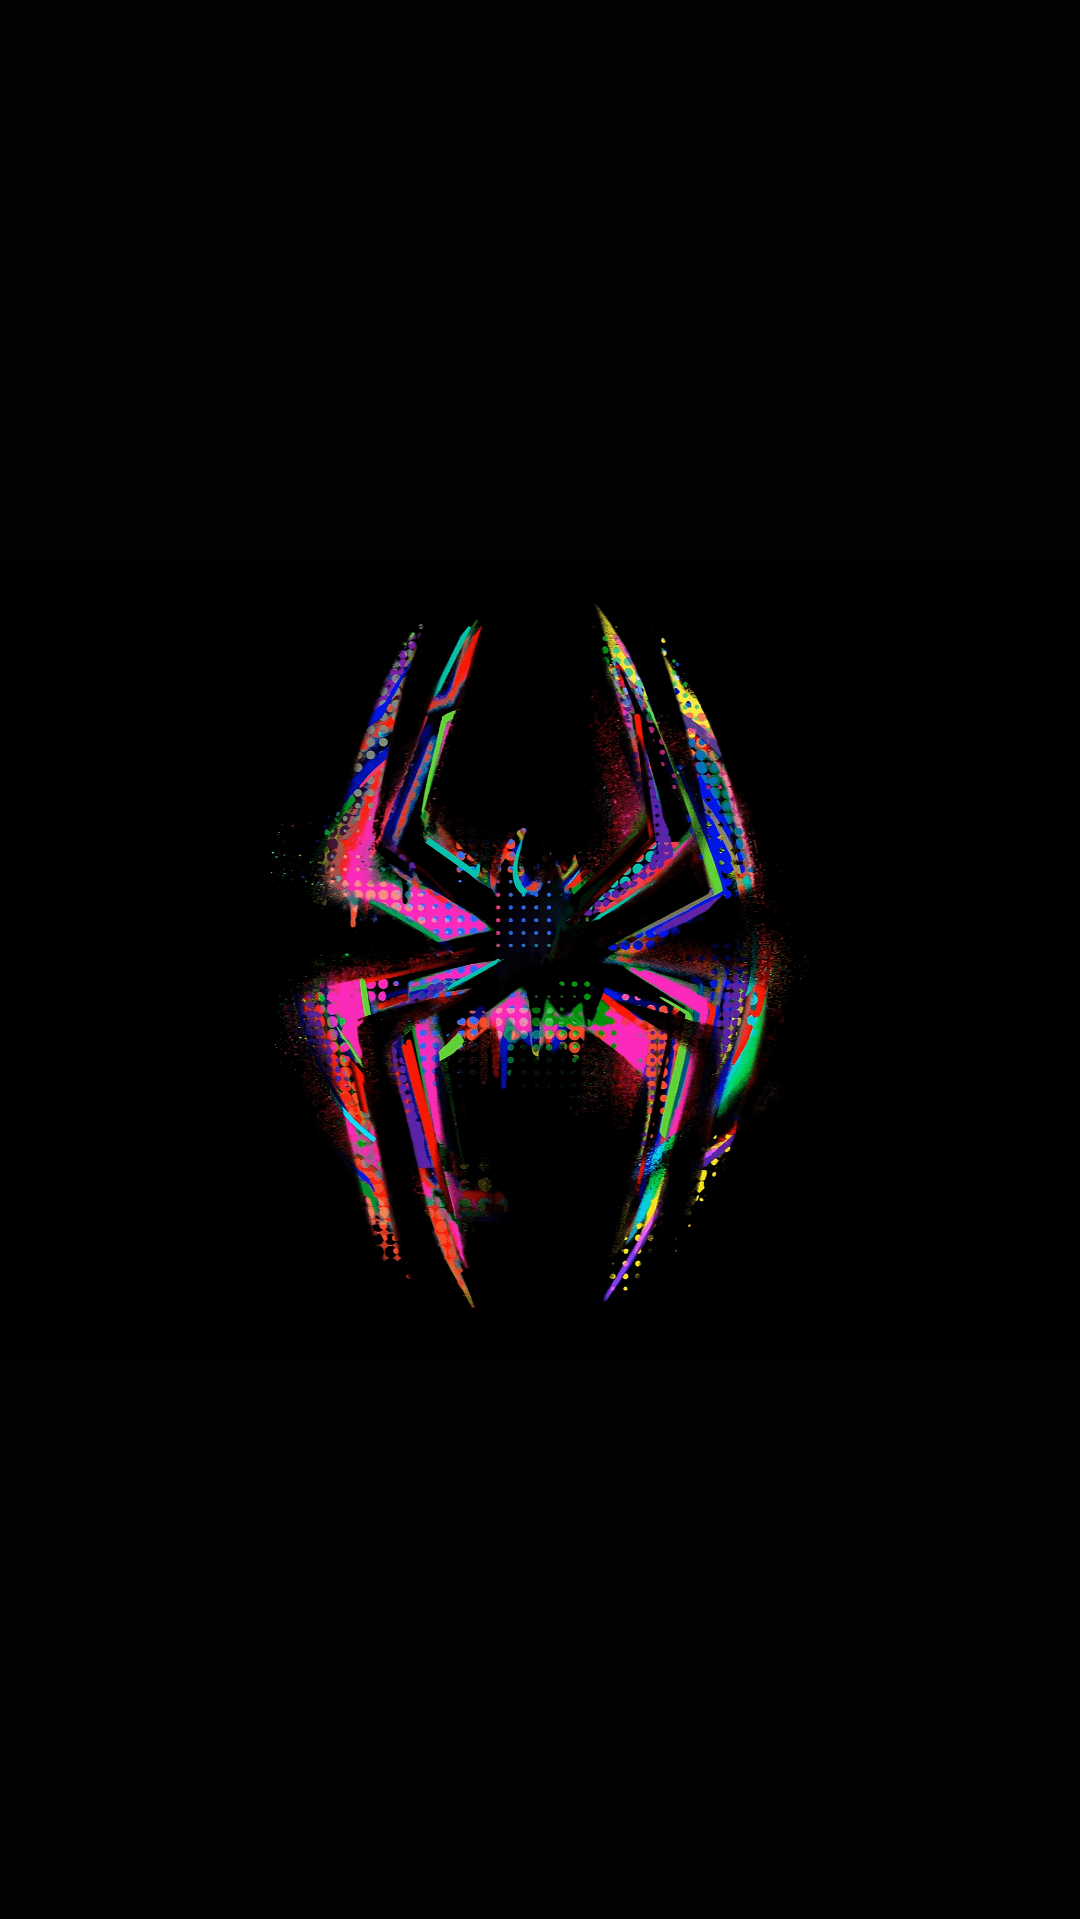 Wallpaper Of Metro Boomin S Album Cover R Spiderman